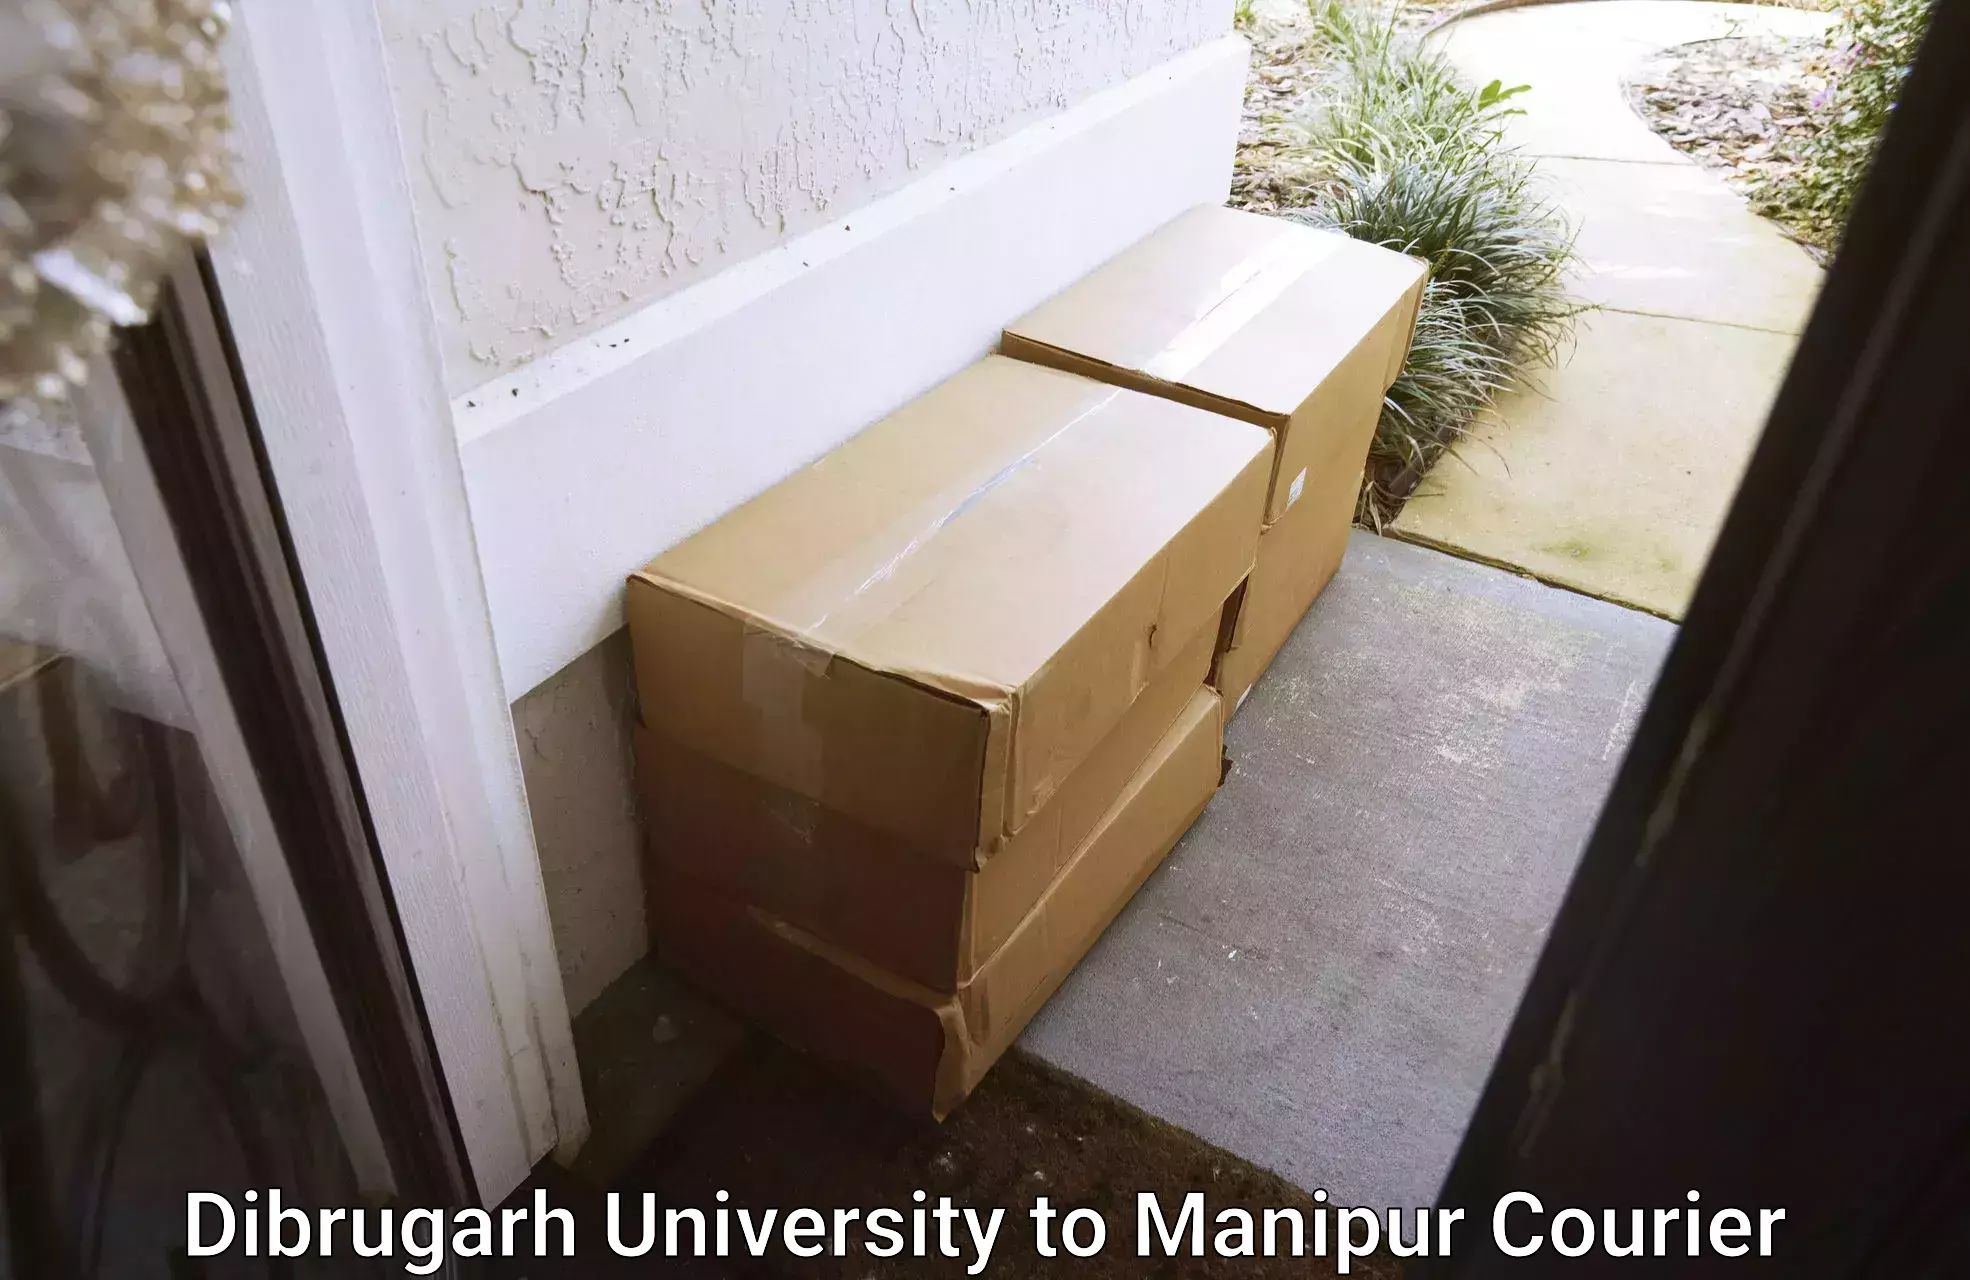 International parcel service Dibrugarh University to Manipur